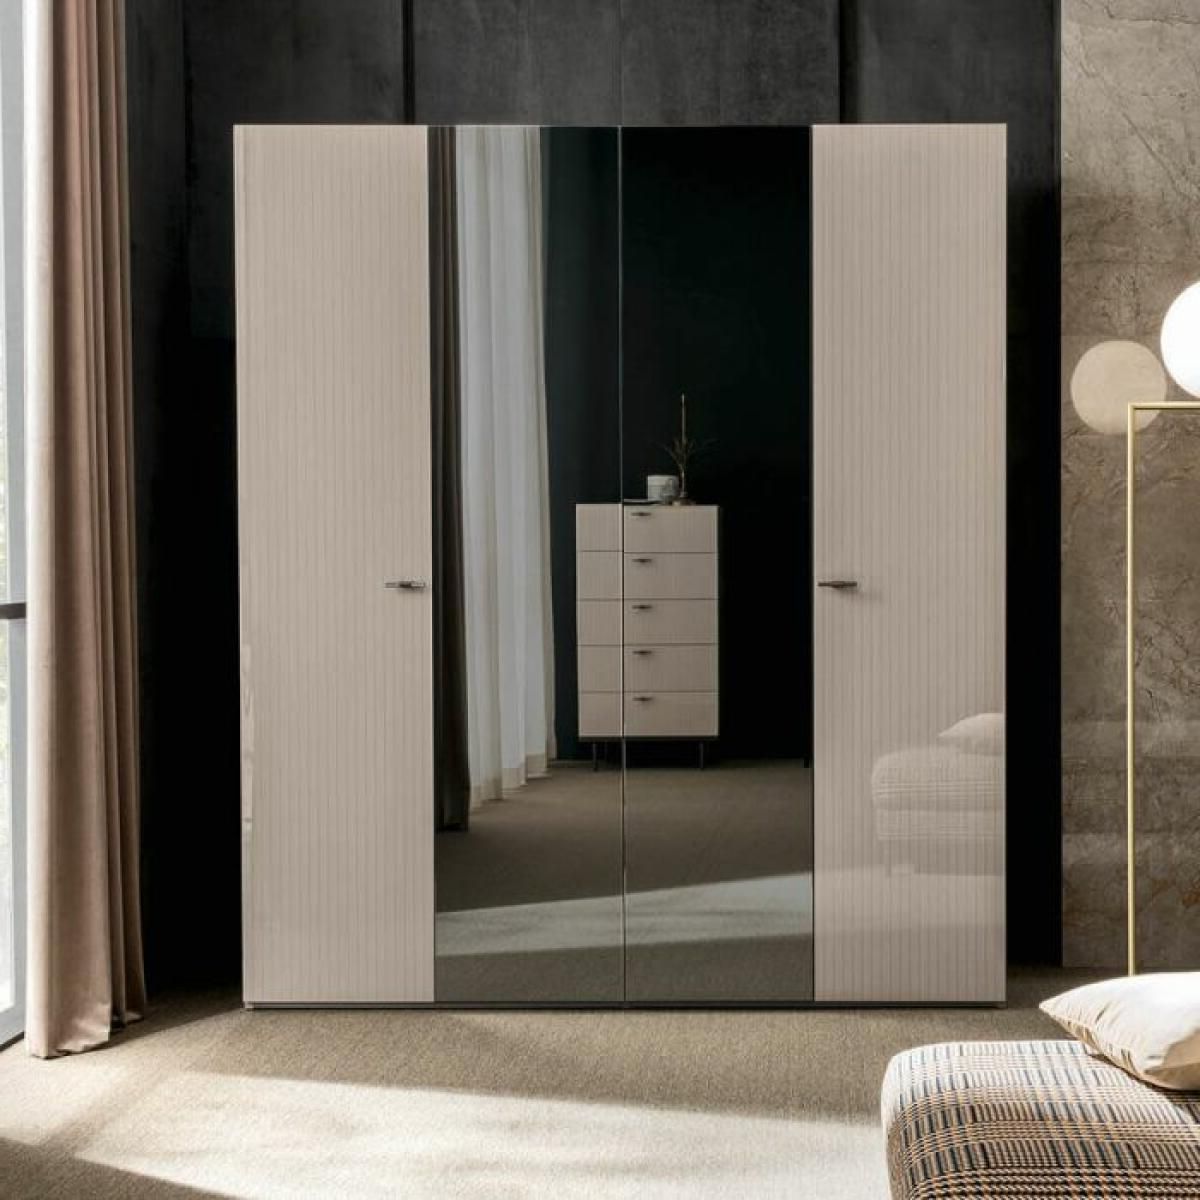 Claire 4 Door High Gloss Mirror Wardrobe – Bova Contemporary Furniture –  Dallas, Texas Modern Furniture Store In 4 Door Wardrobes With Mirror And Drawers (Gallery 14 of 20)